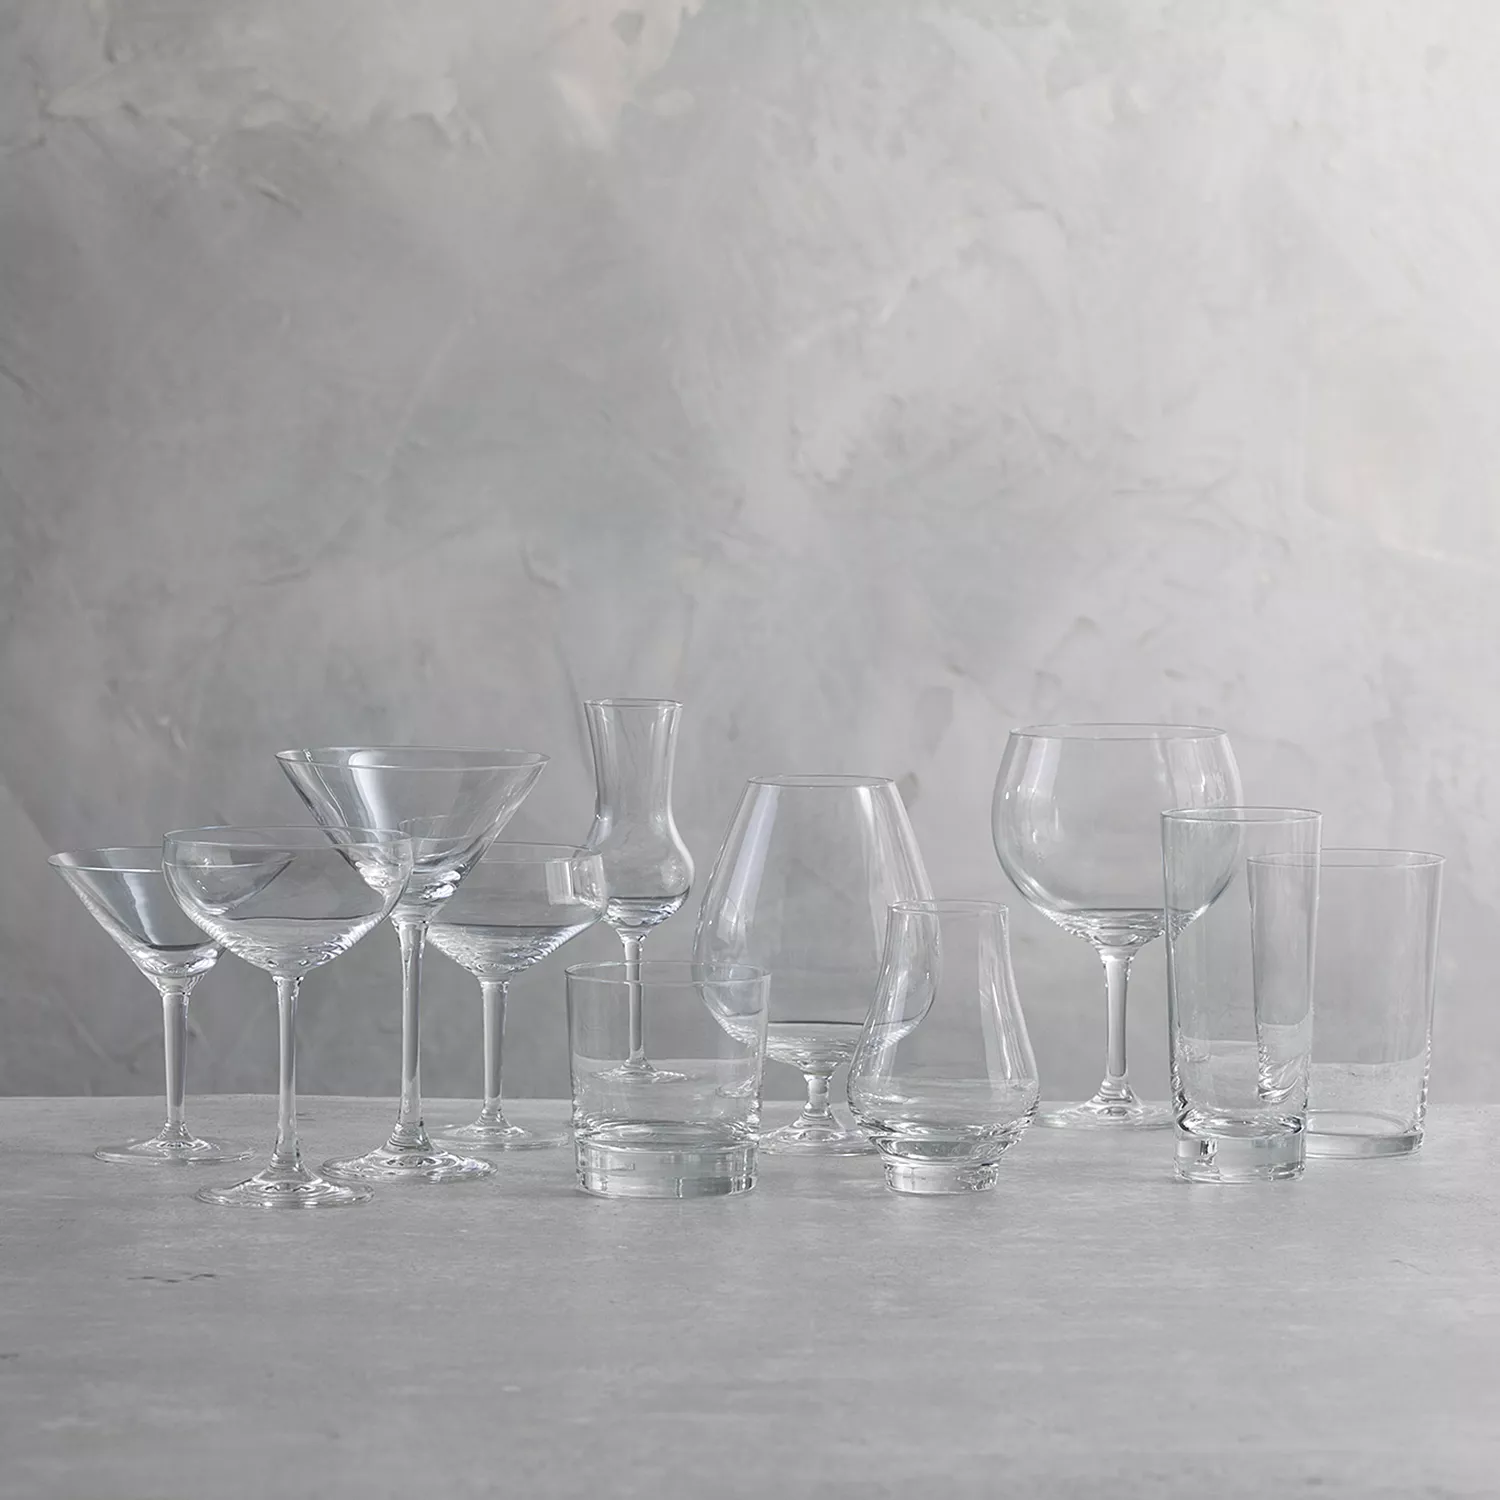 Fortessa Pure Martini 11.6oz Glass, Set of 6, Schott Zwiesel